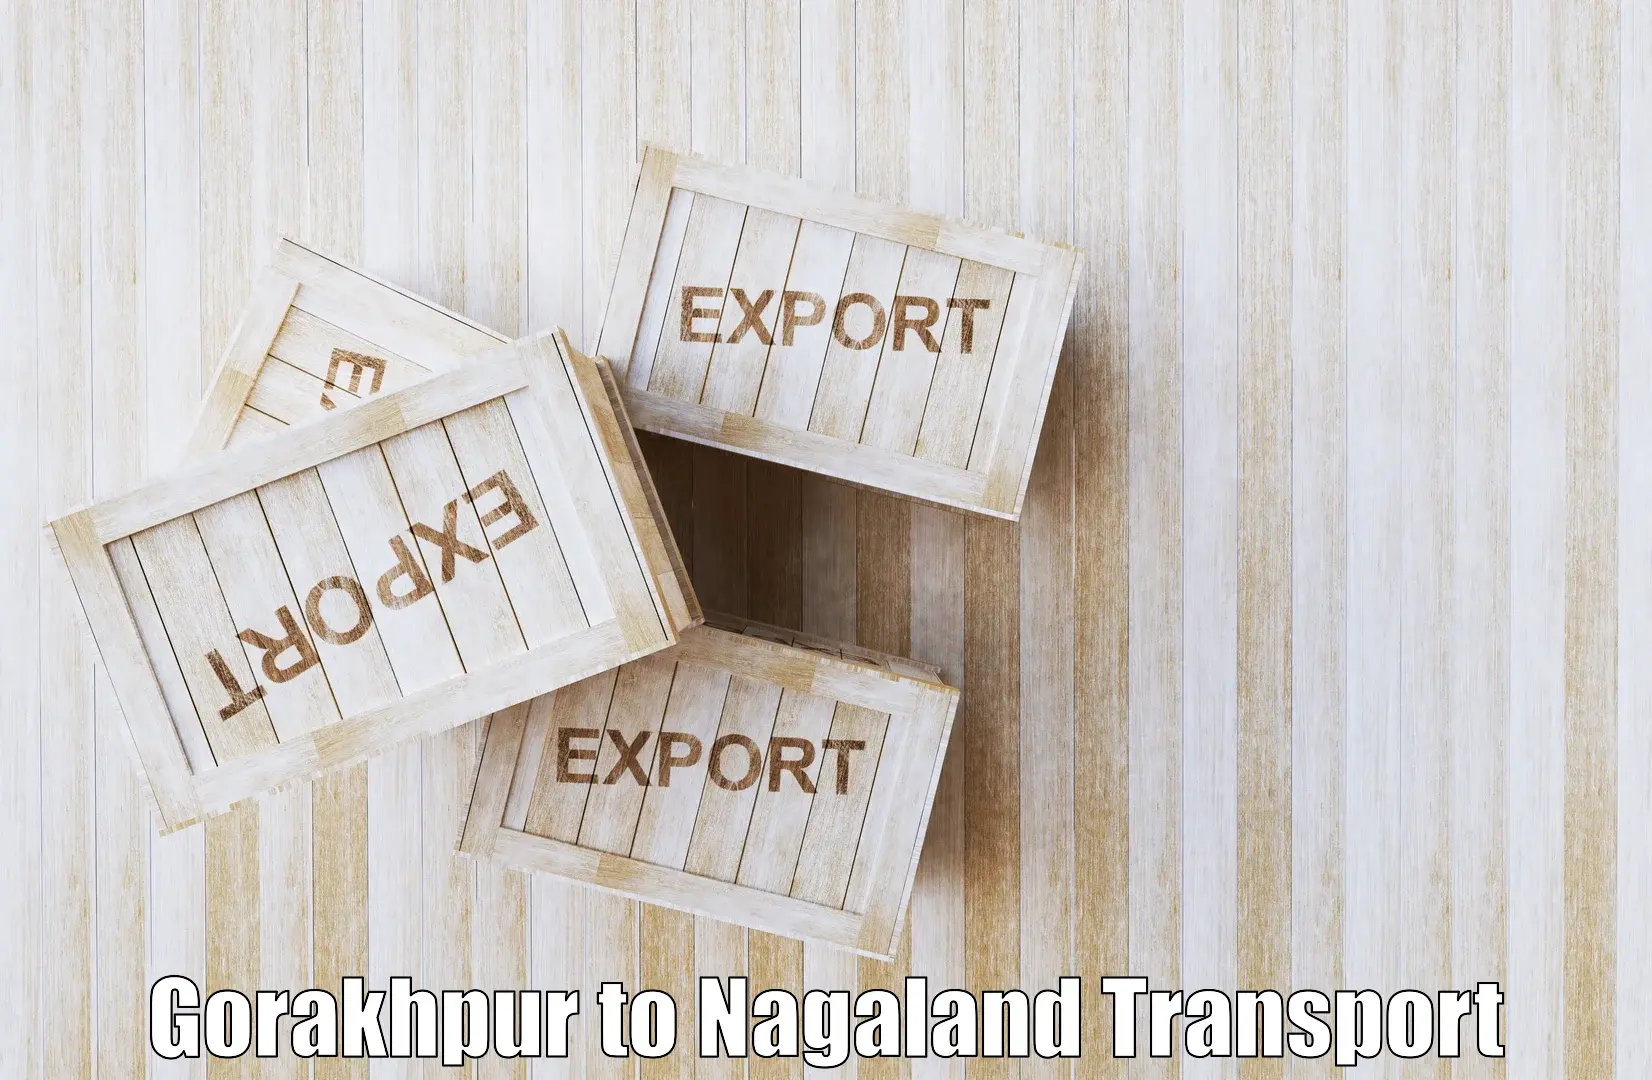 Transport in sharing Gorakhpur to Dimapur